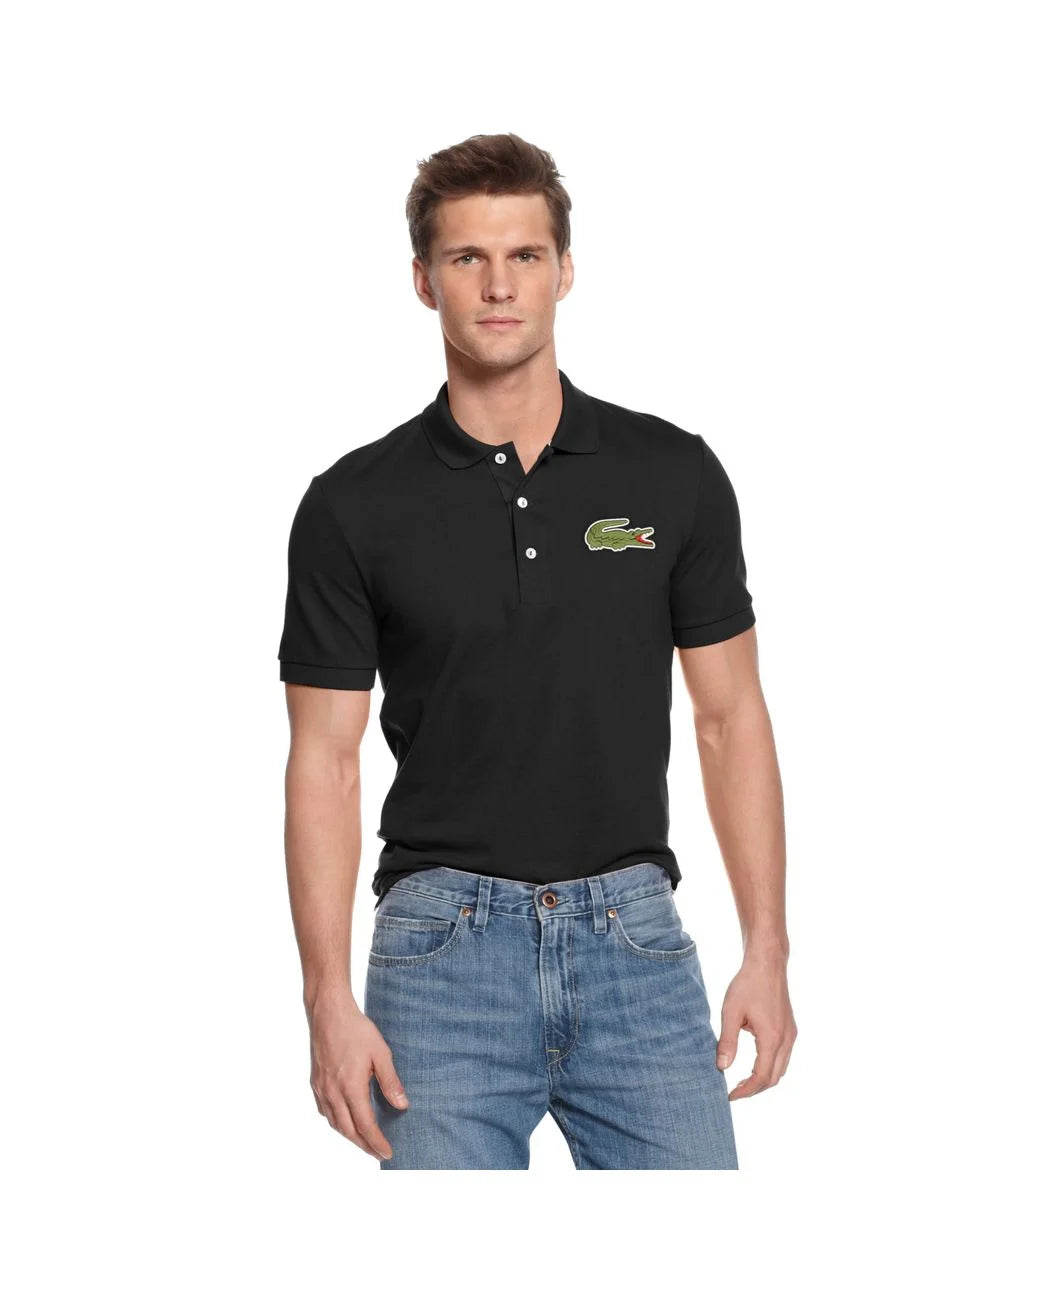 Men's Short Sleeve Lacoste Polo Shirt - Black